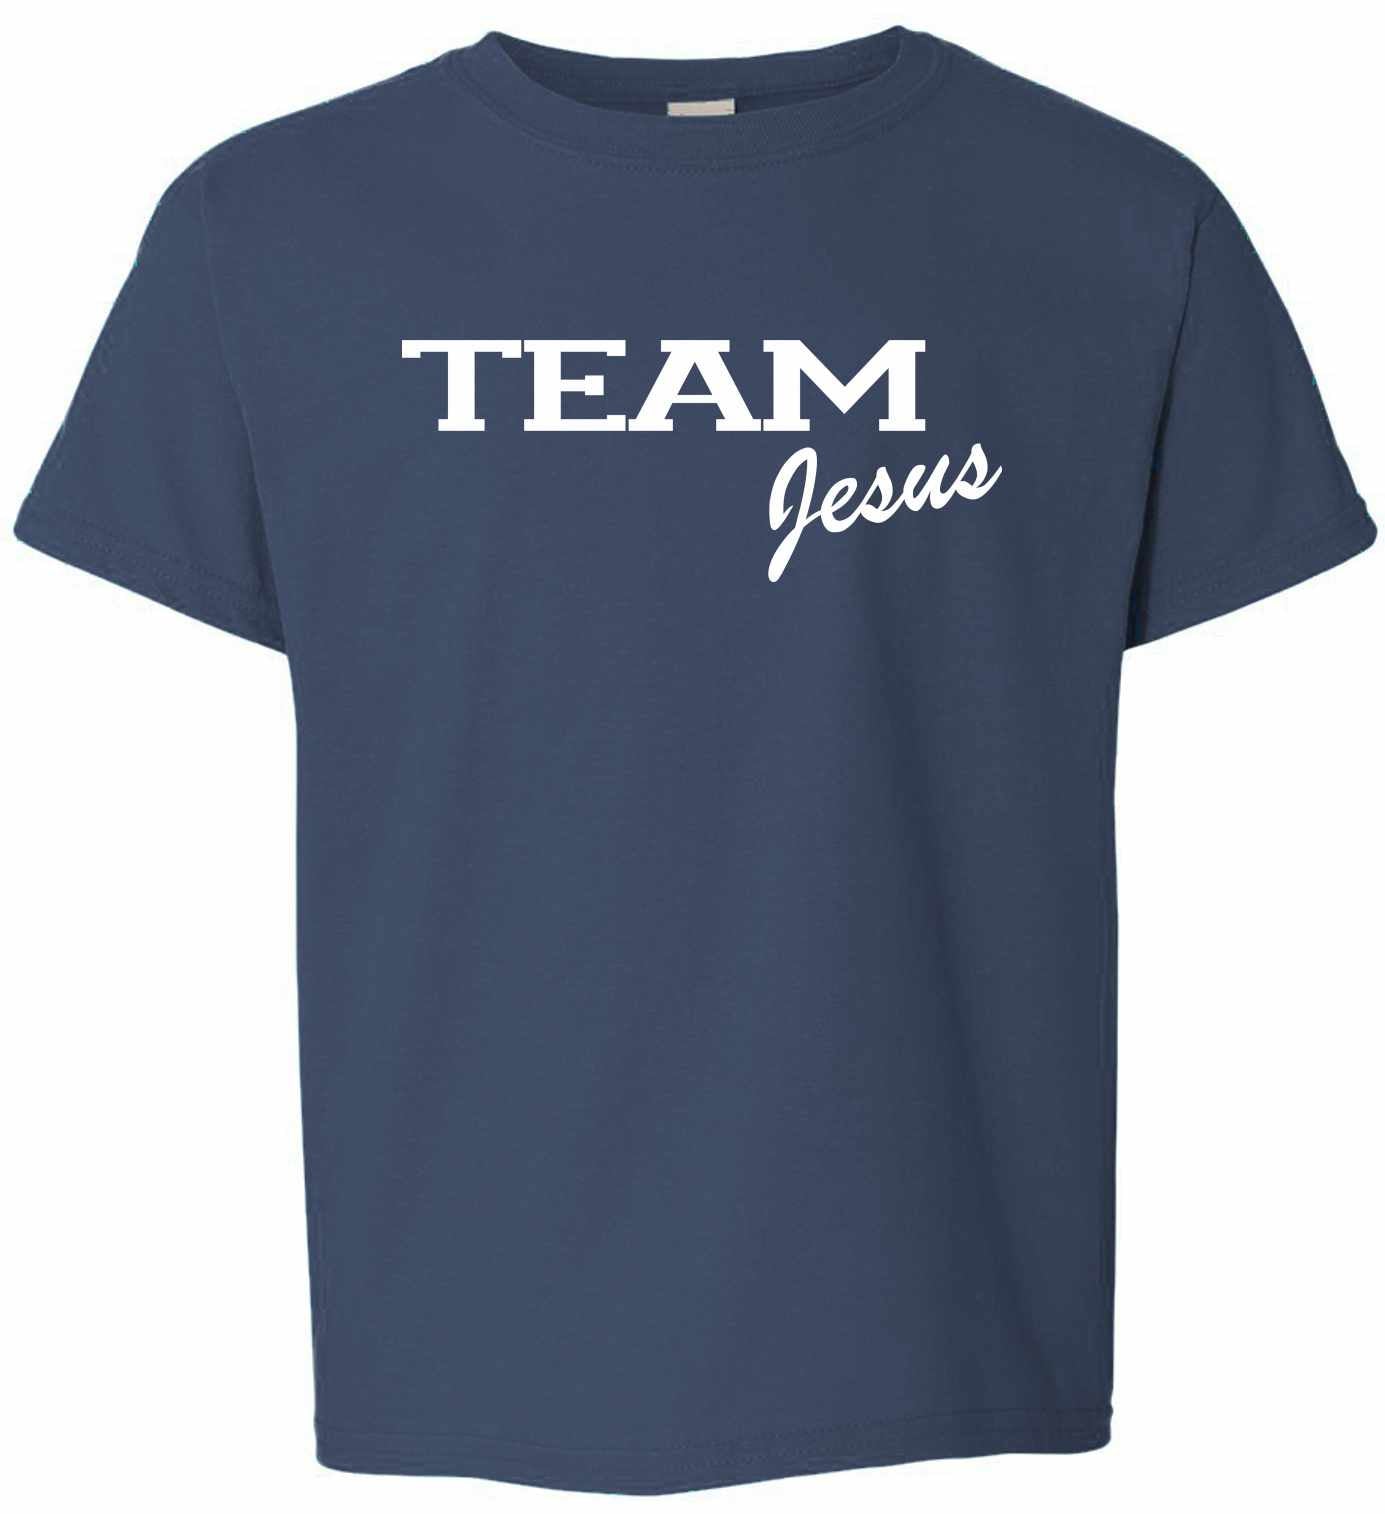 TEAM Jesus on Kids T-Shirt (#225-201)